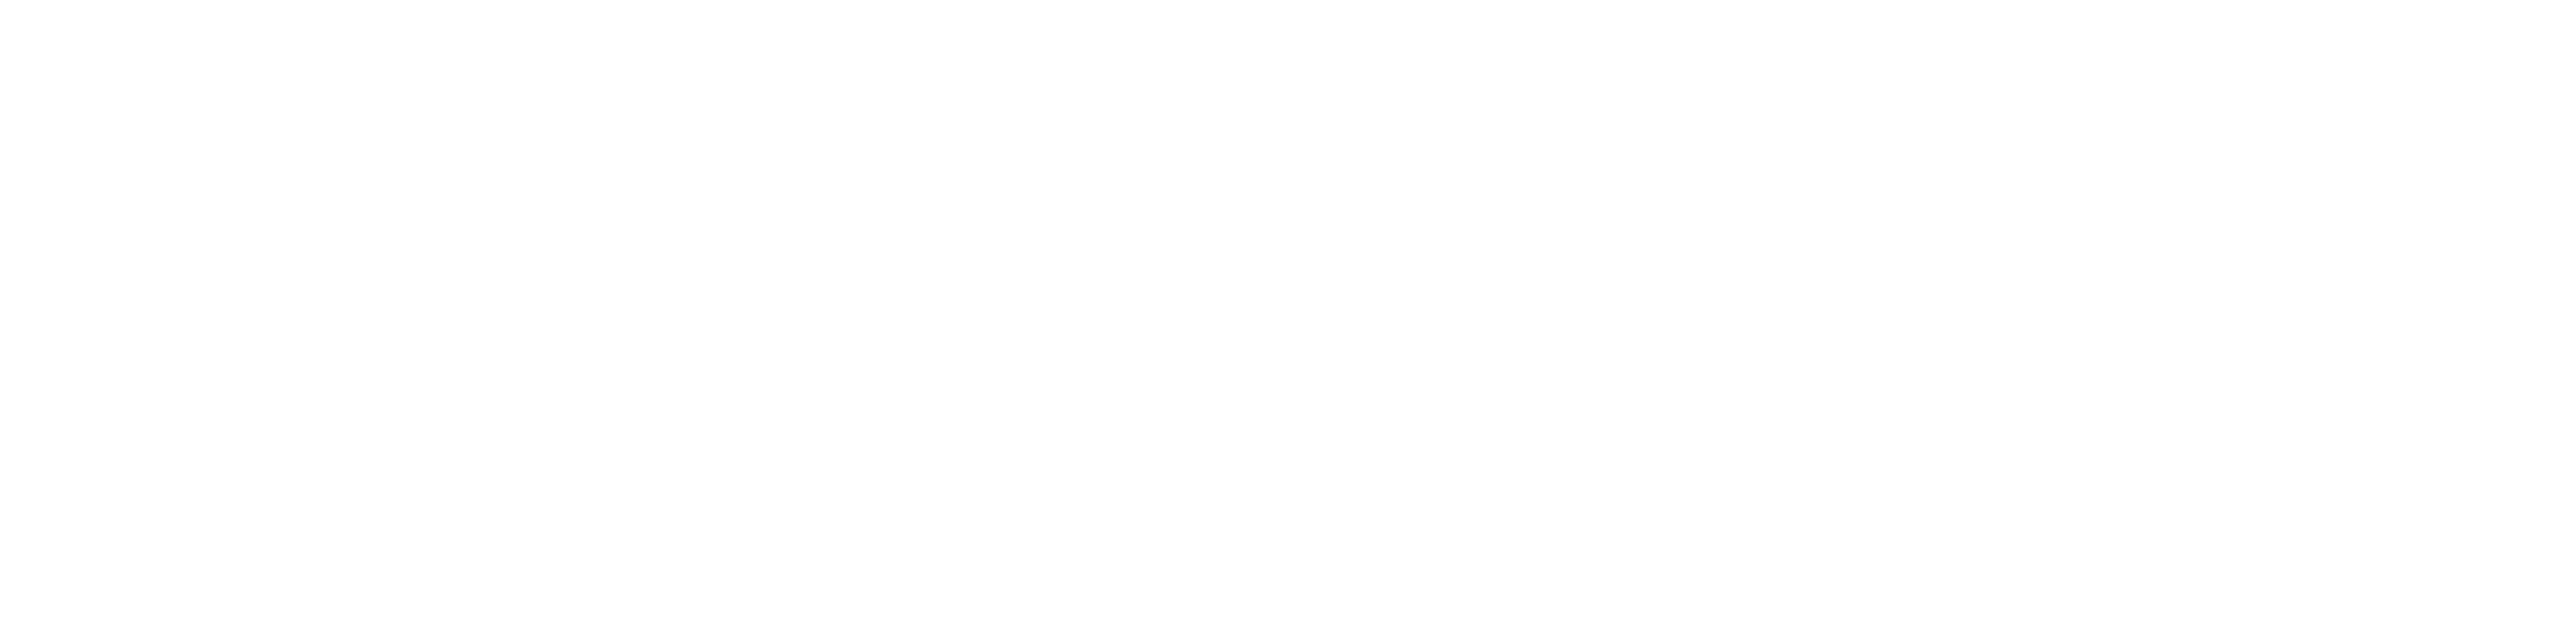 payyswitch-logo